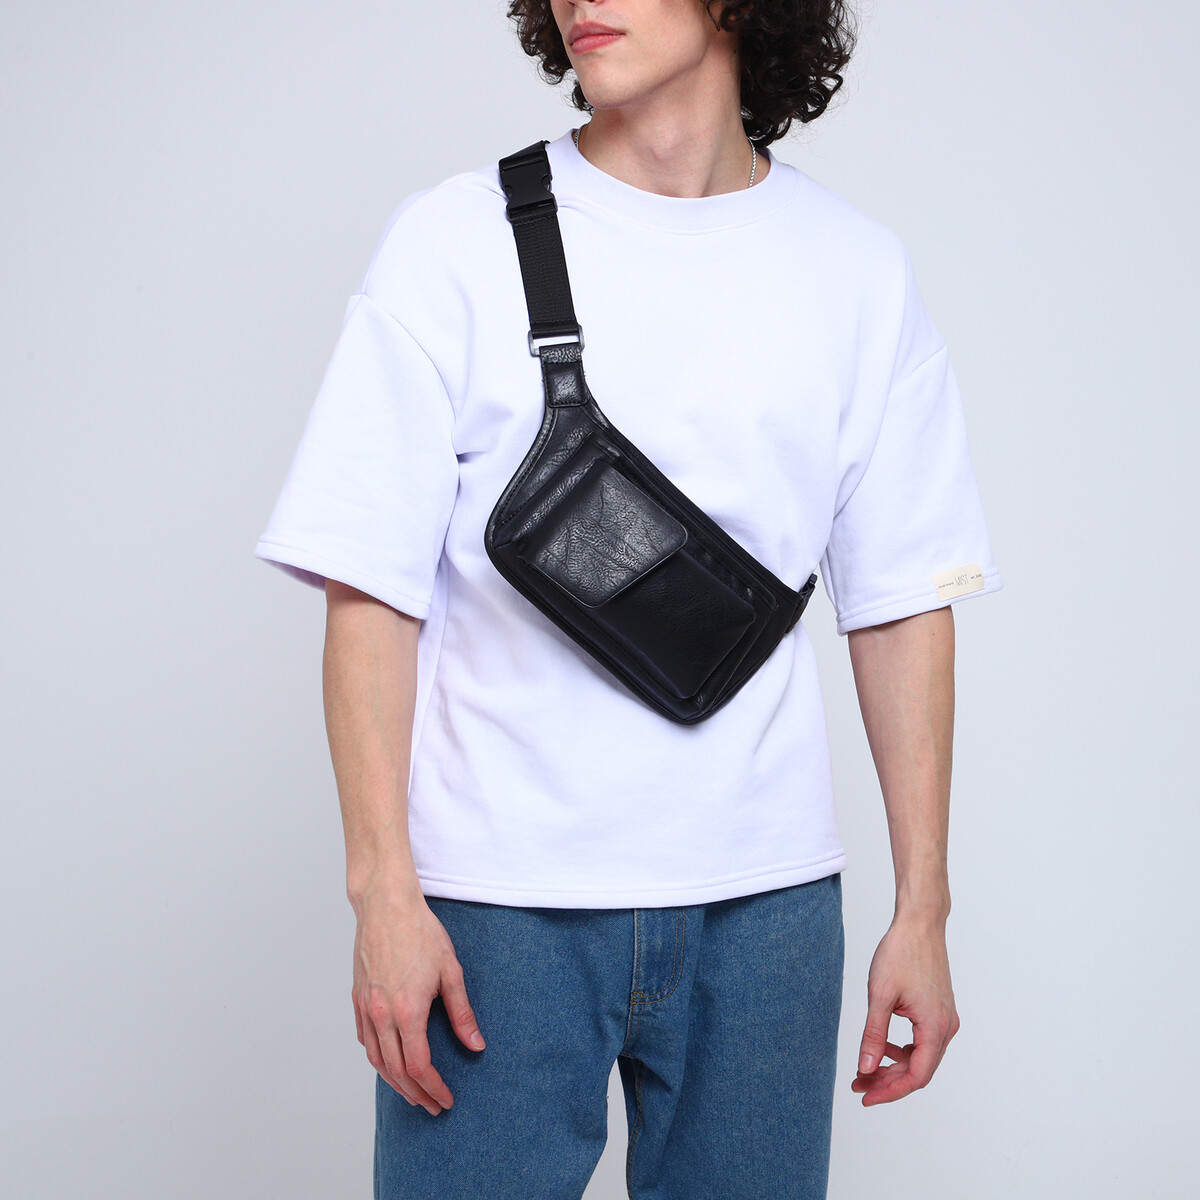 Поясная сумка на молнии, 3 наружных кармана, цвет черный поясная сумка для садового инструмента на ремне 3 кармана